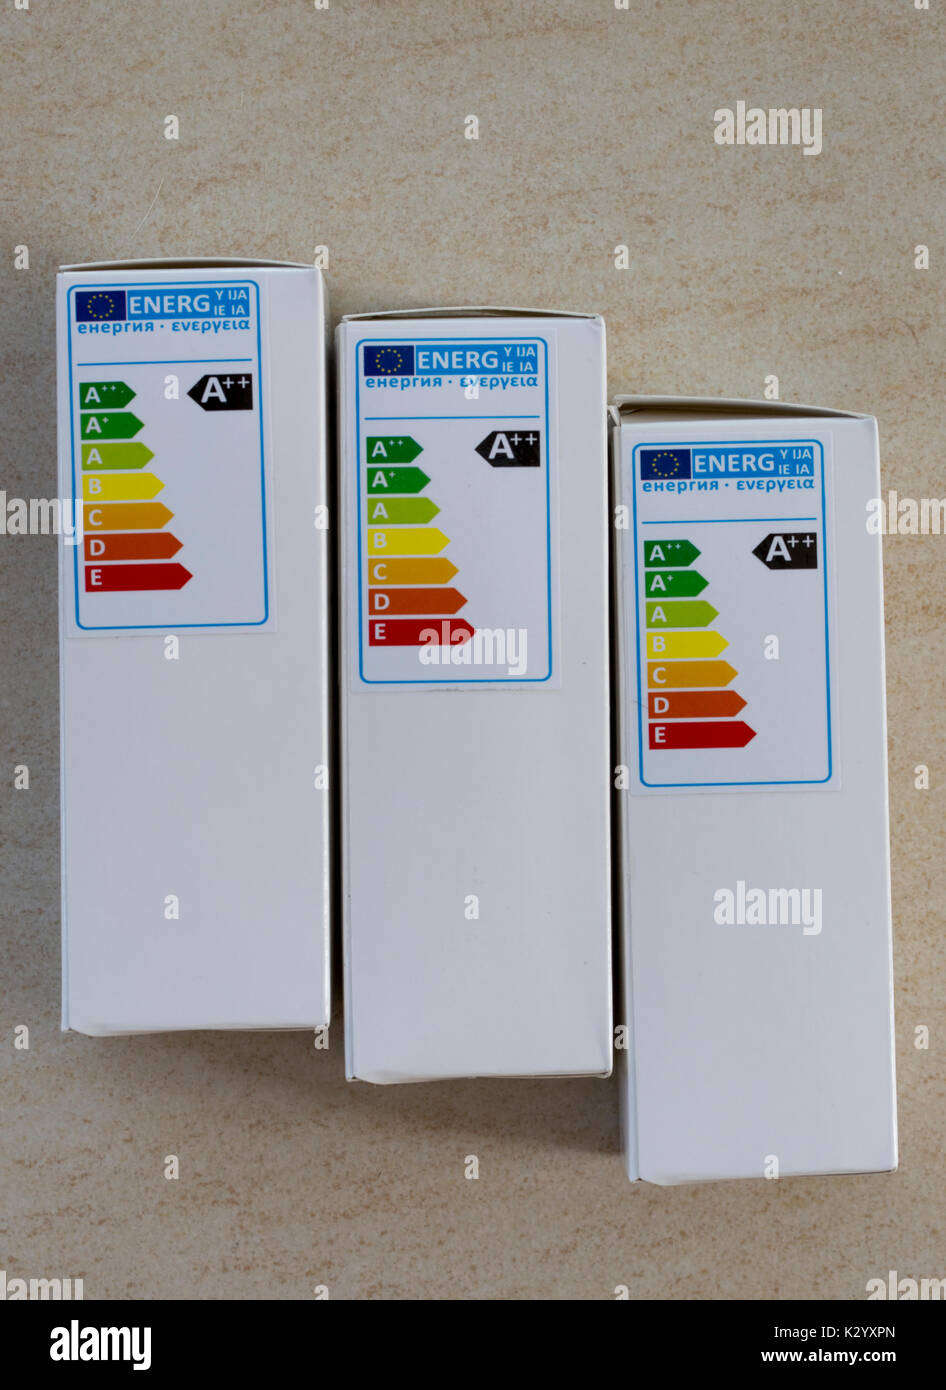 A++-Energie-Effizienz-Label auf LED-Lampe, Großbritannien Stockfotografie -  Alamy